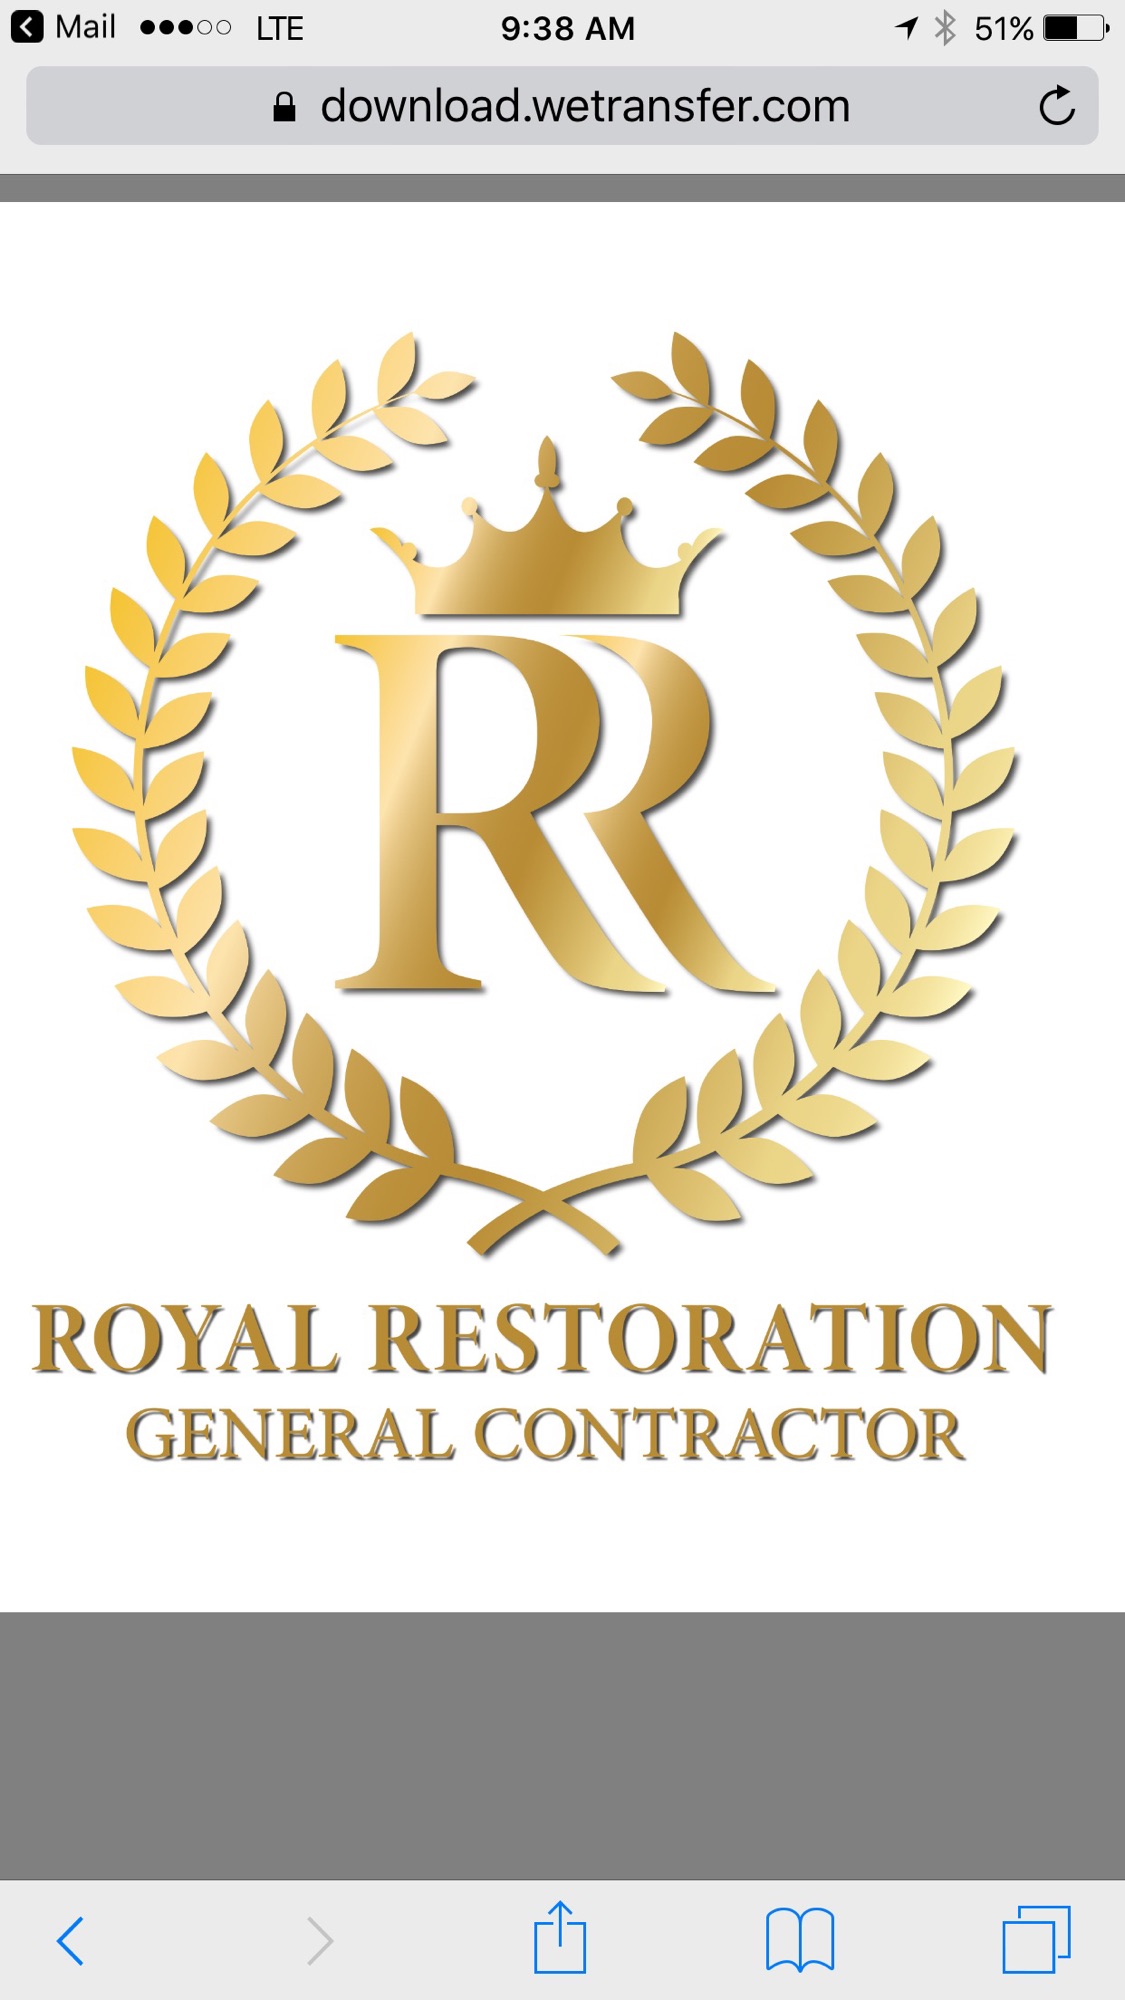 Royal Restoration 2012, LLC Logo